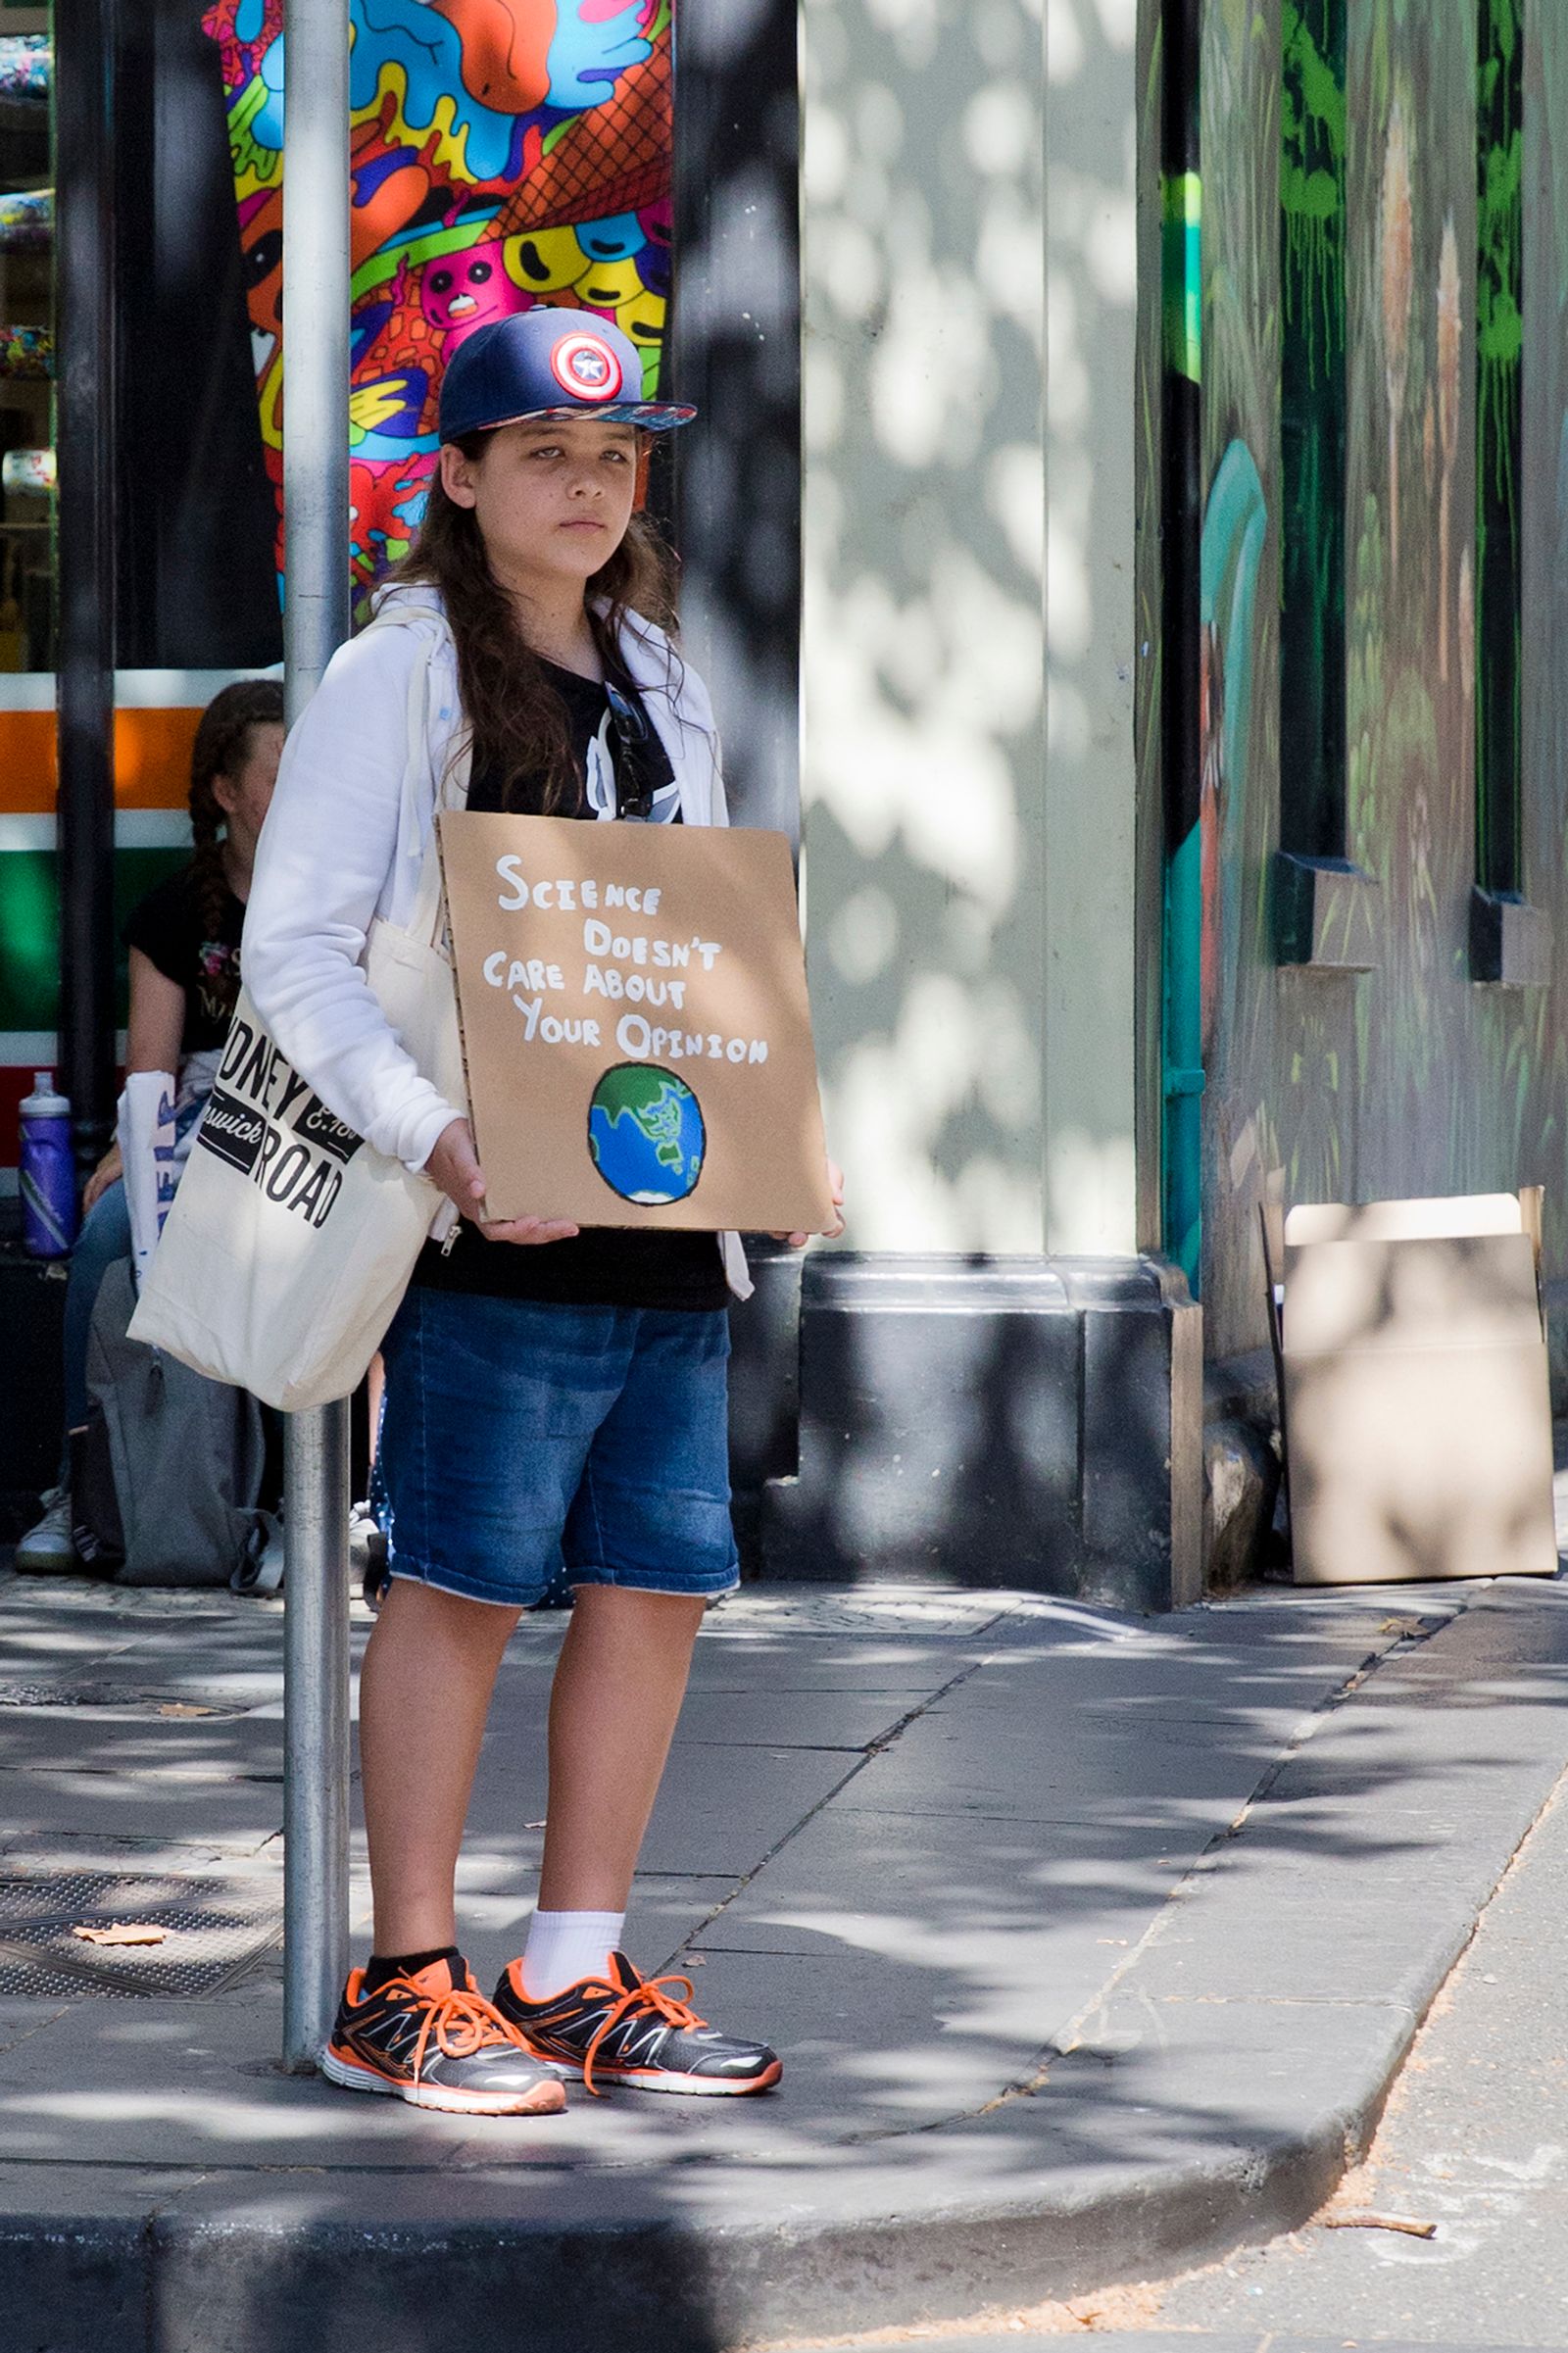 © MAYLEI HUNT - Schools Strike for Climate Change, Sydney Australia 2019